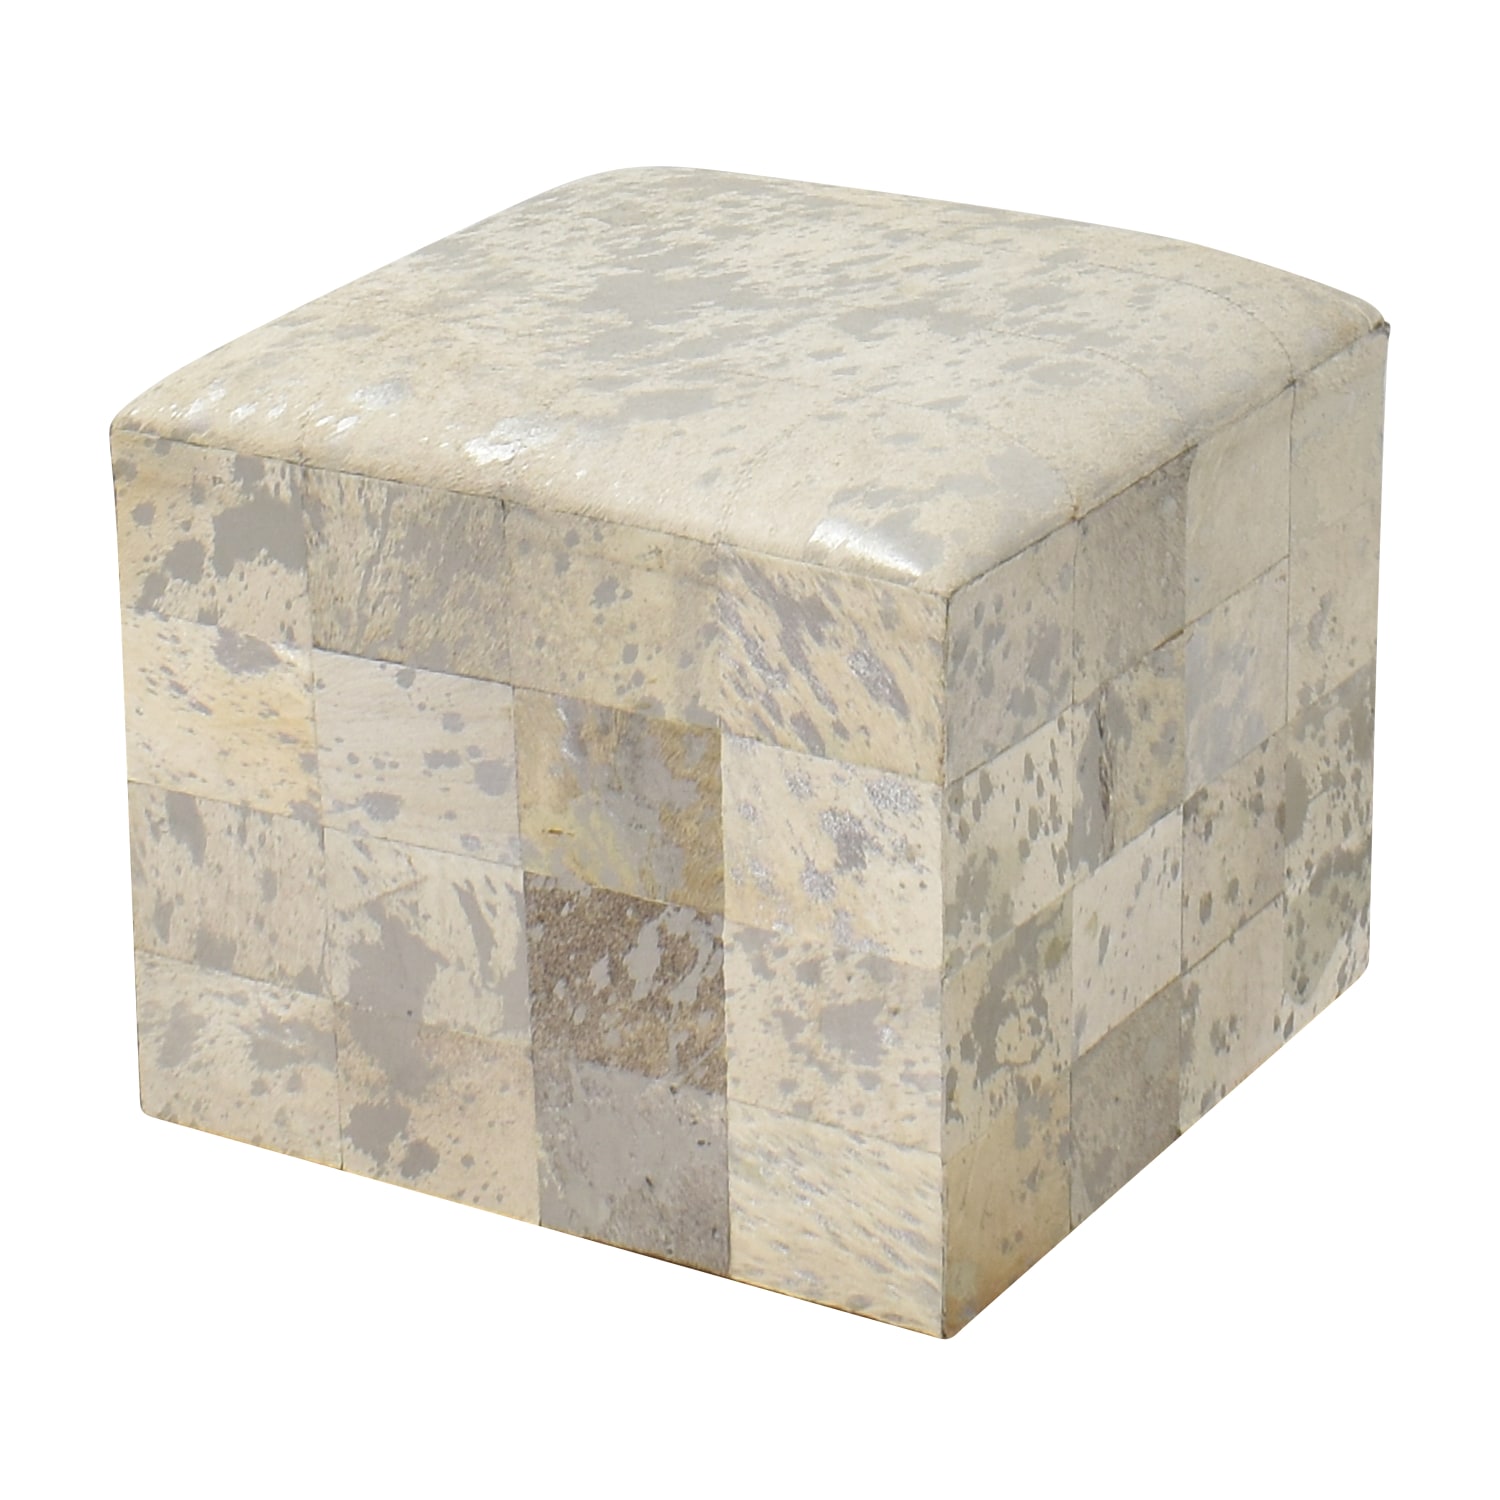  Natural Cube Ottoman price